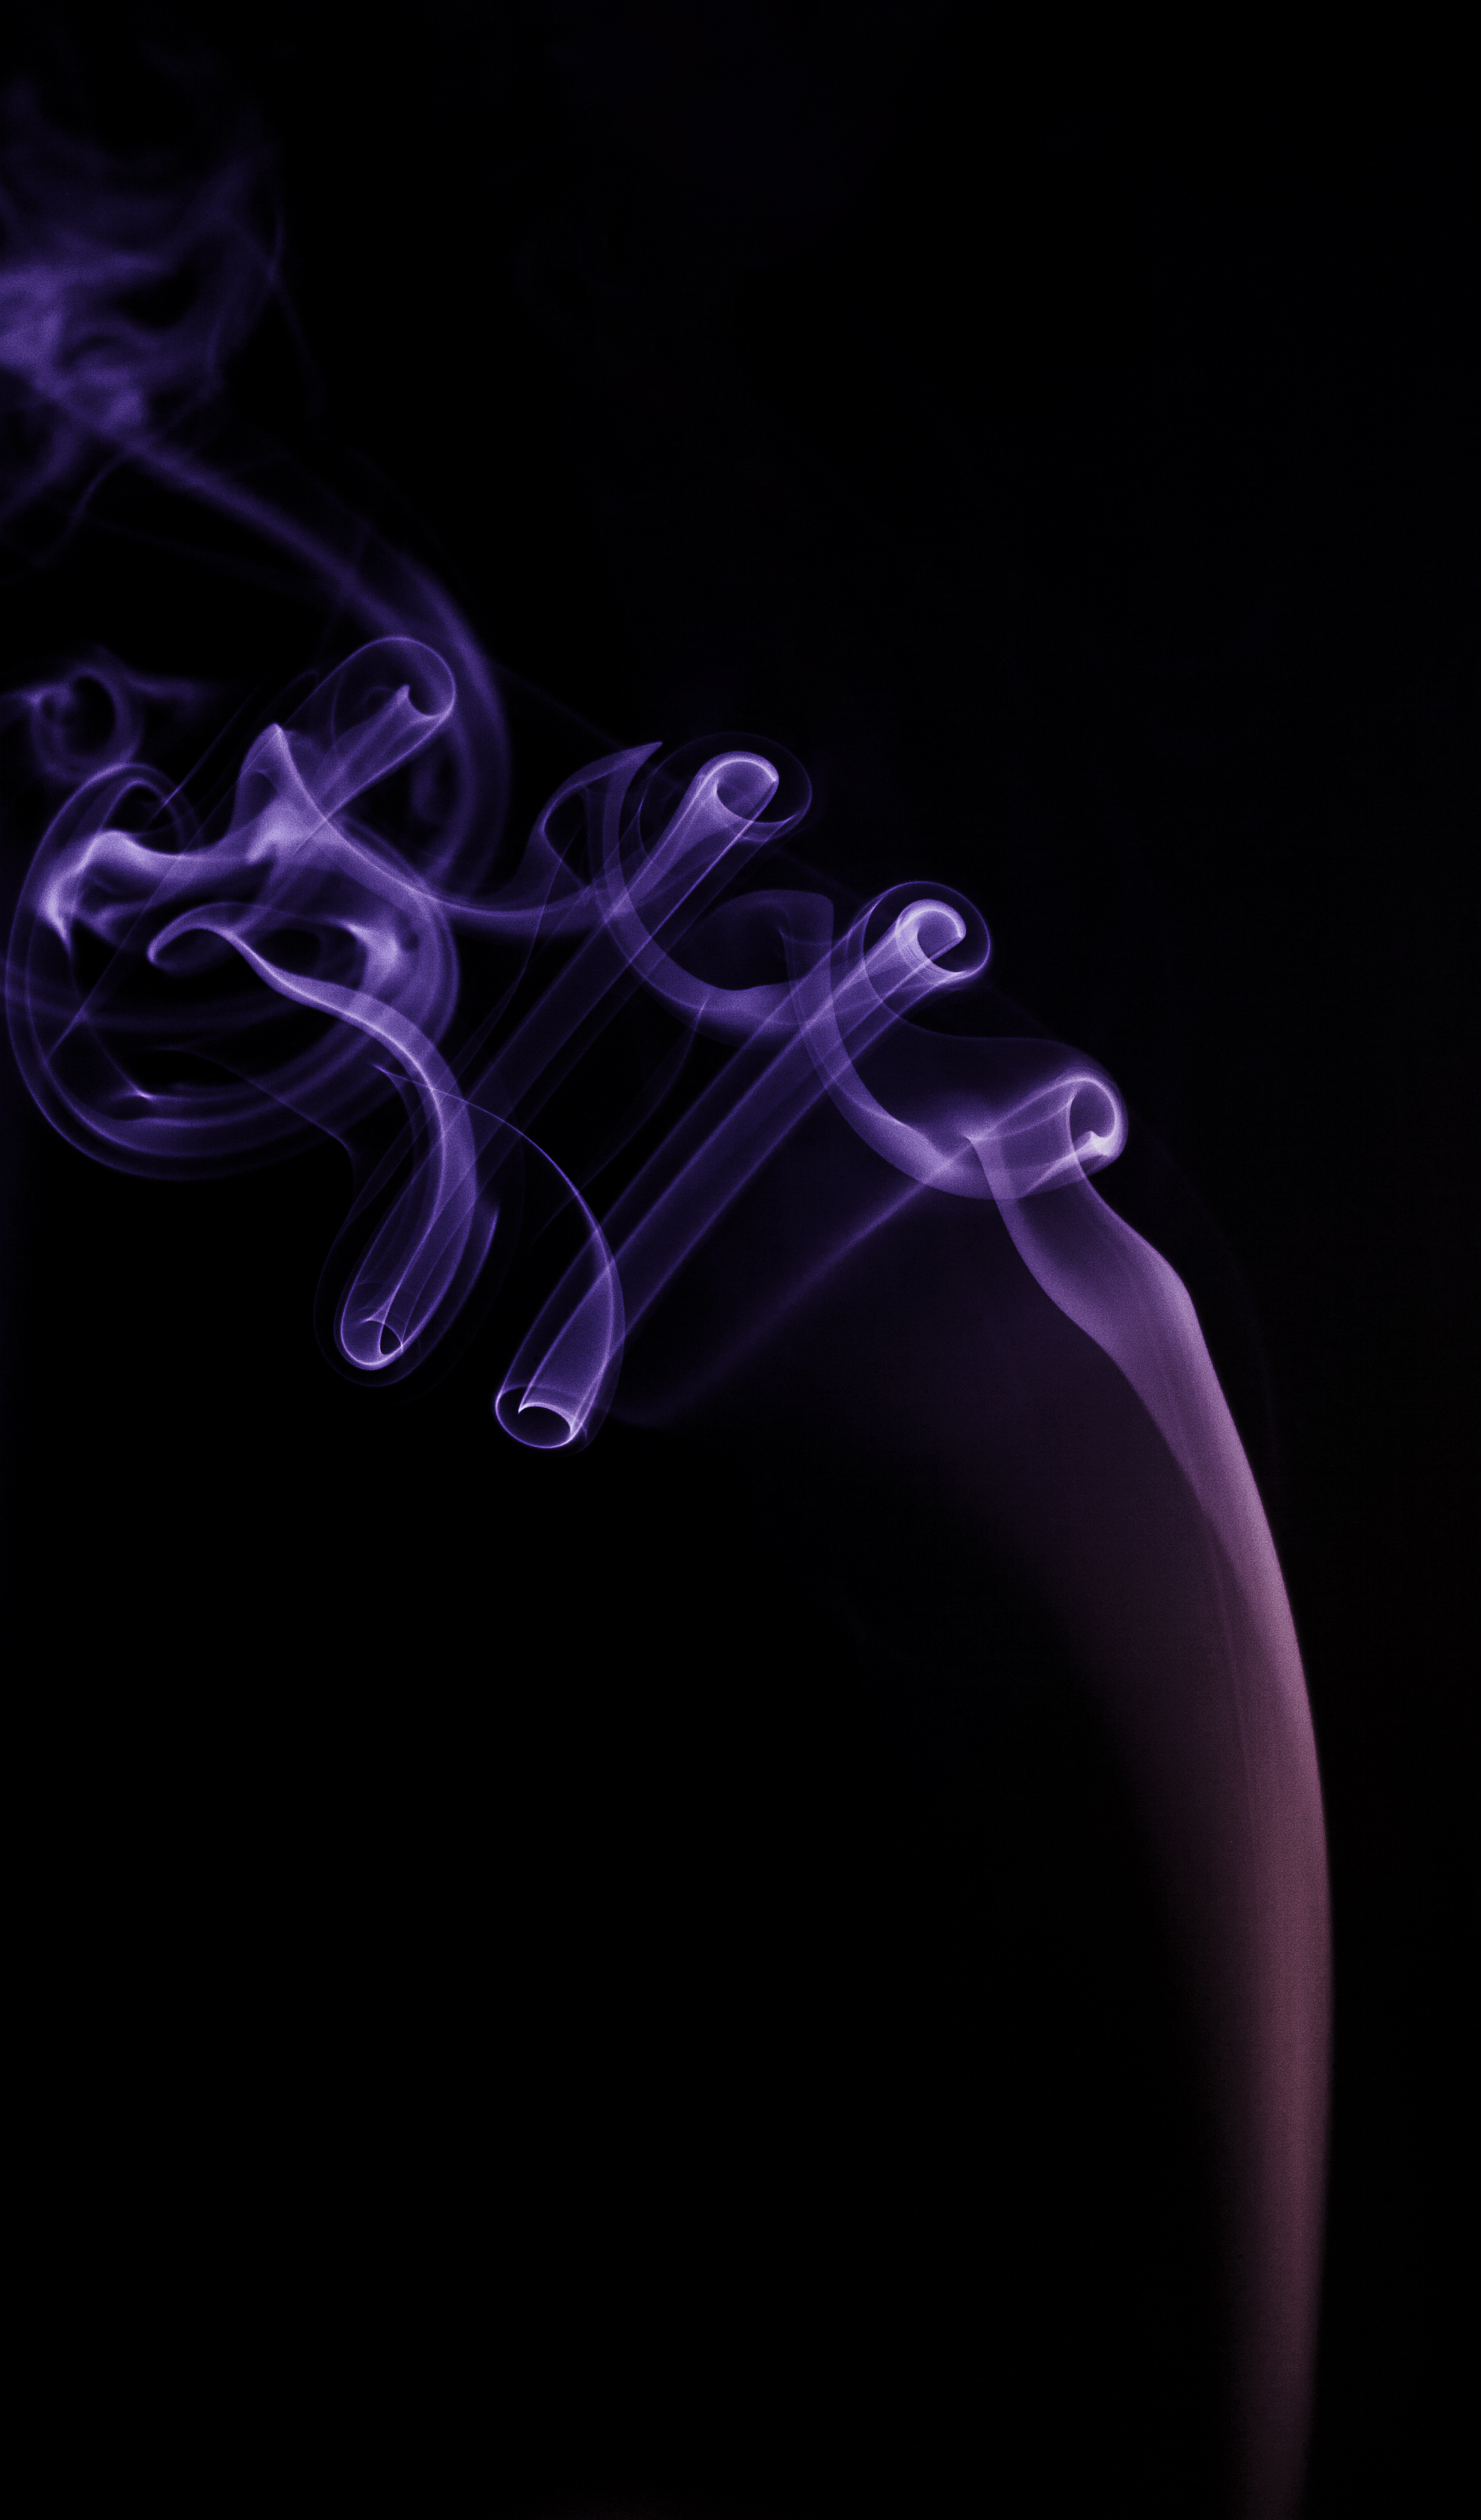 abstract, smoke, violet, black, purple, twisting, torsion